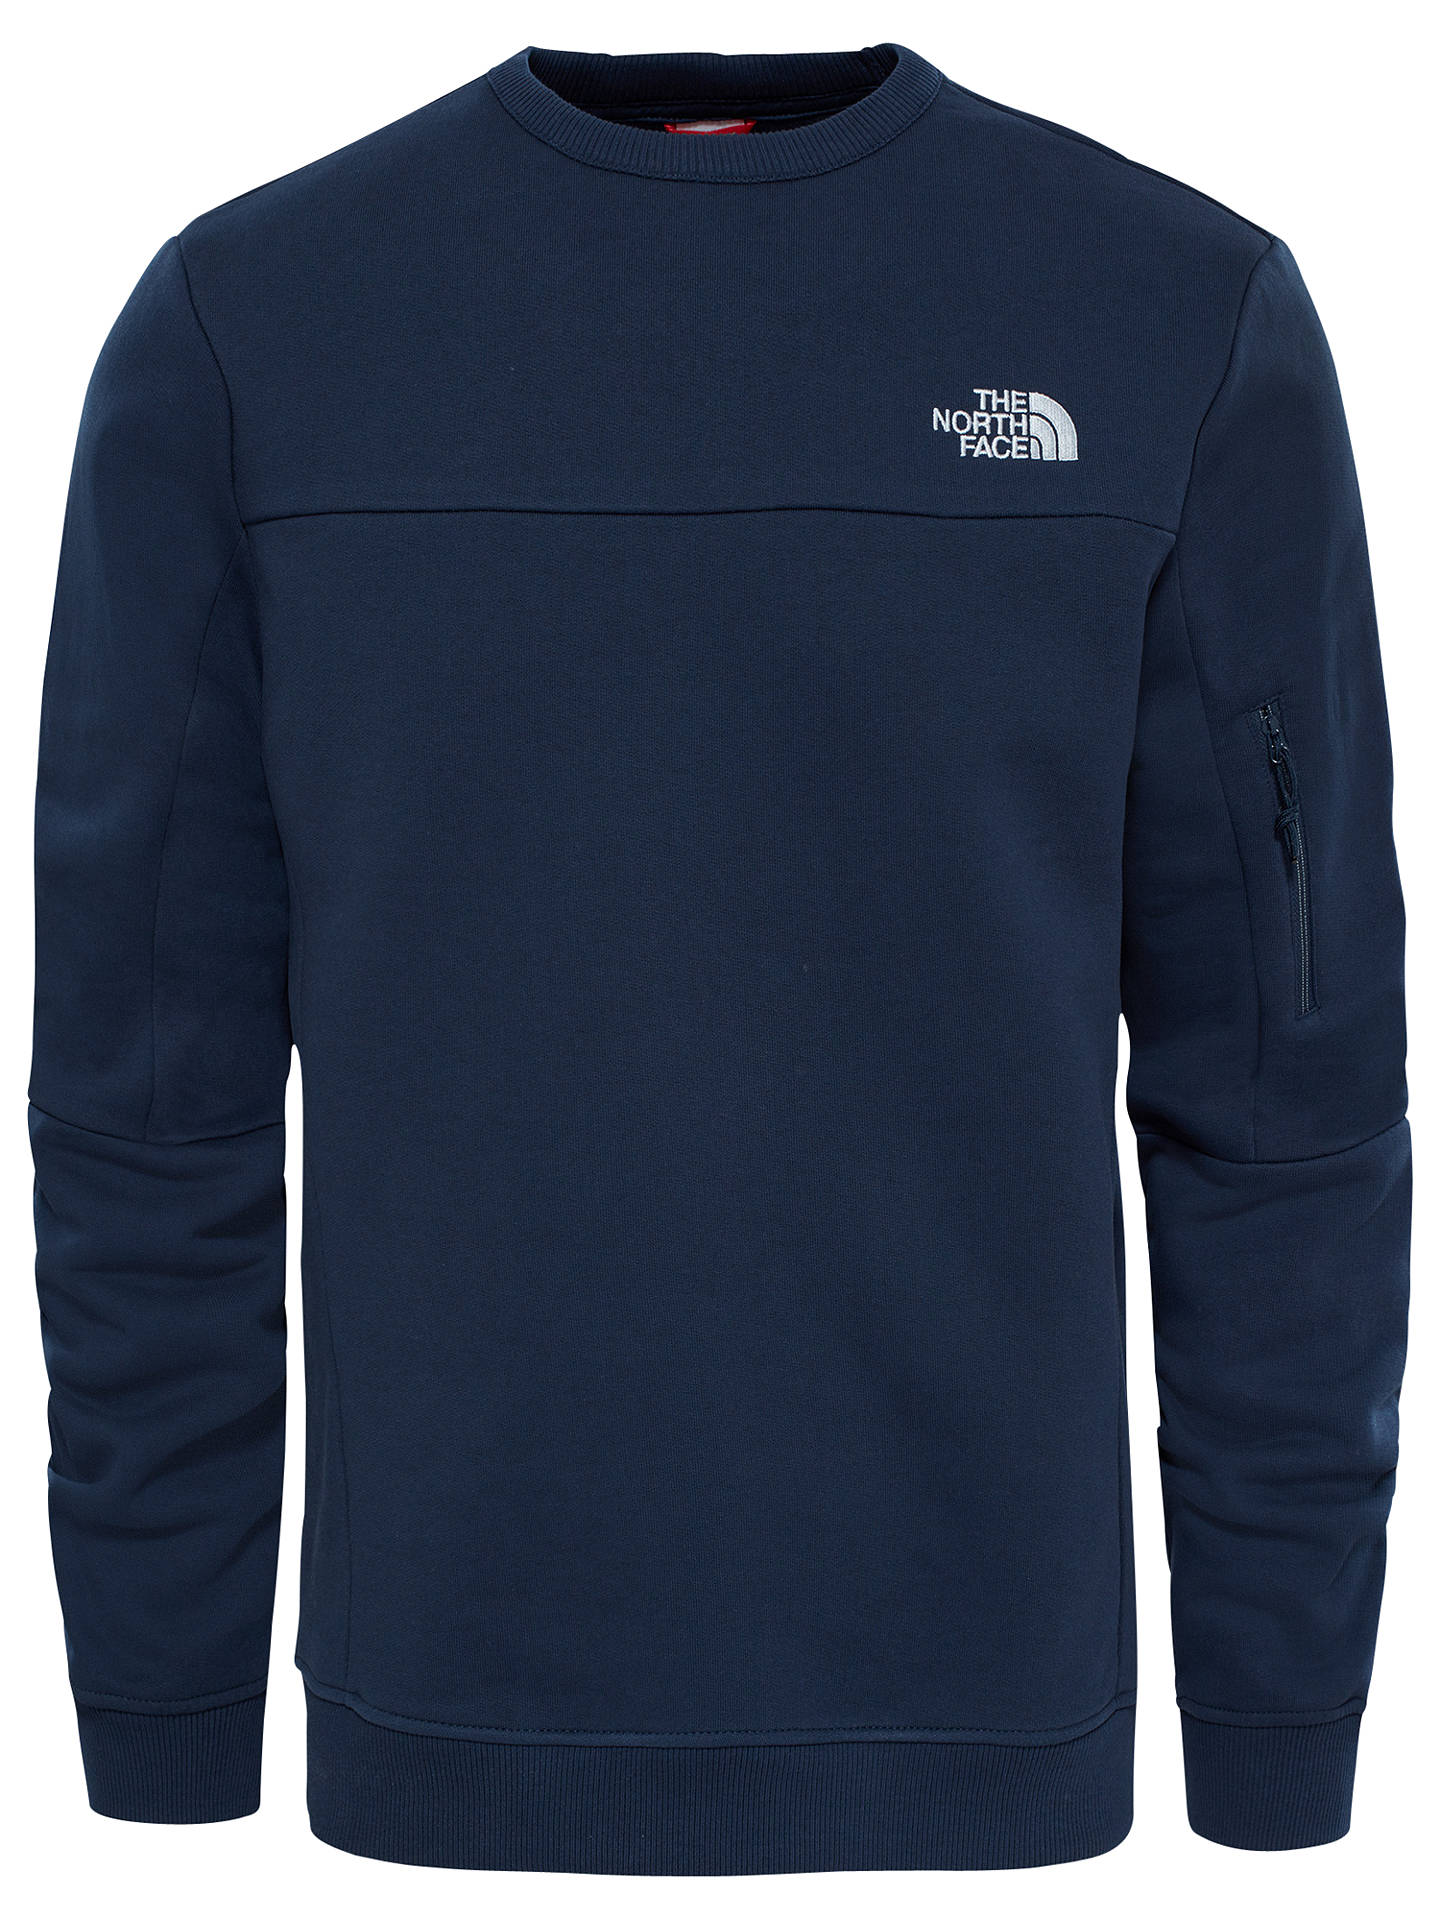 The North Face Crew Pocket Sweatshirt, Navy at John Lewis & Partners